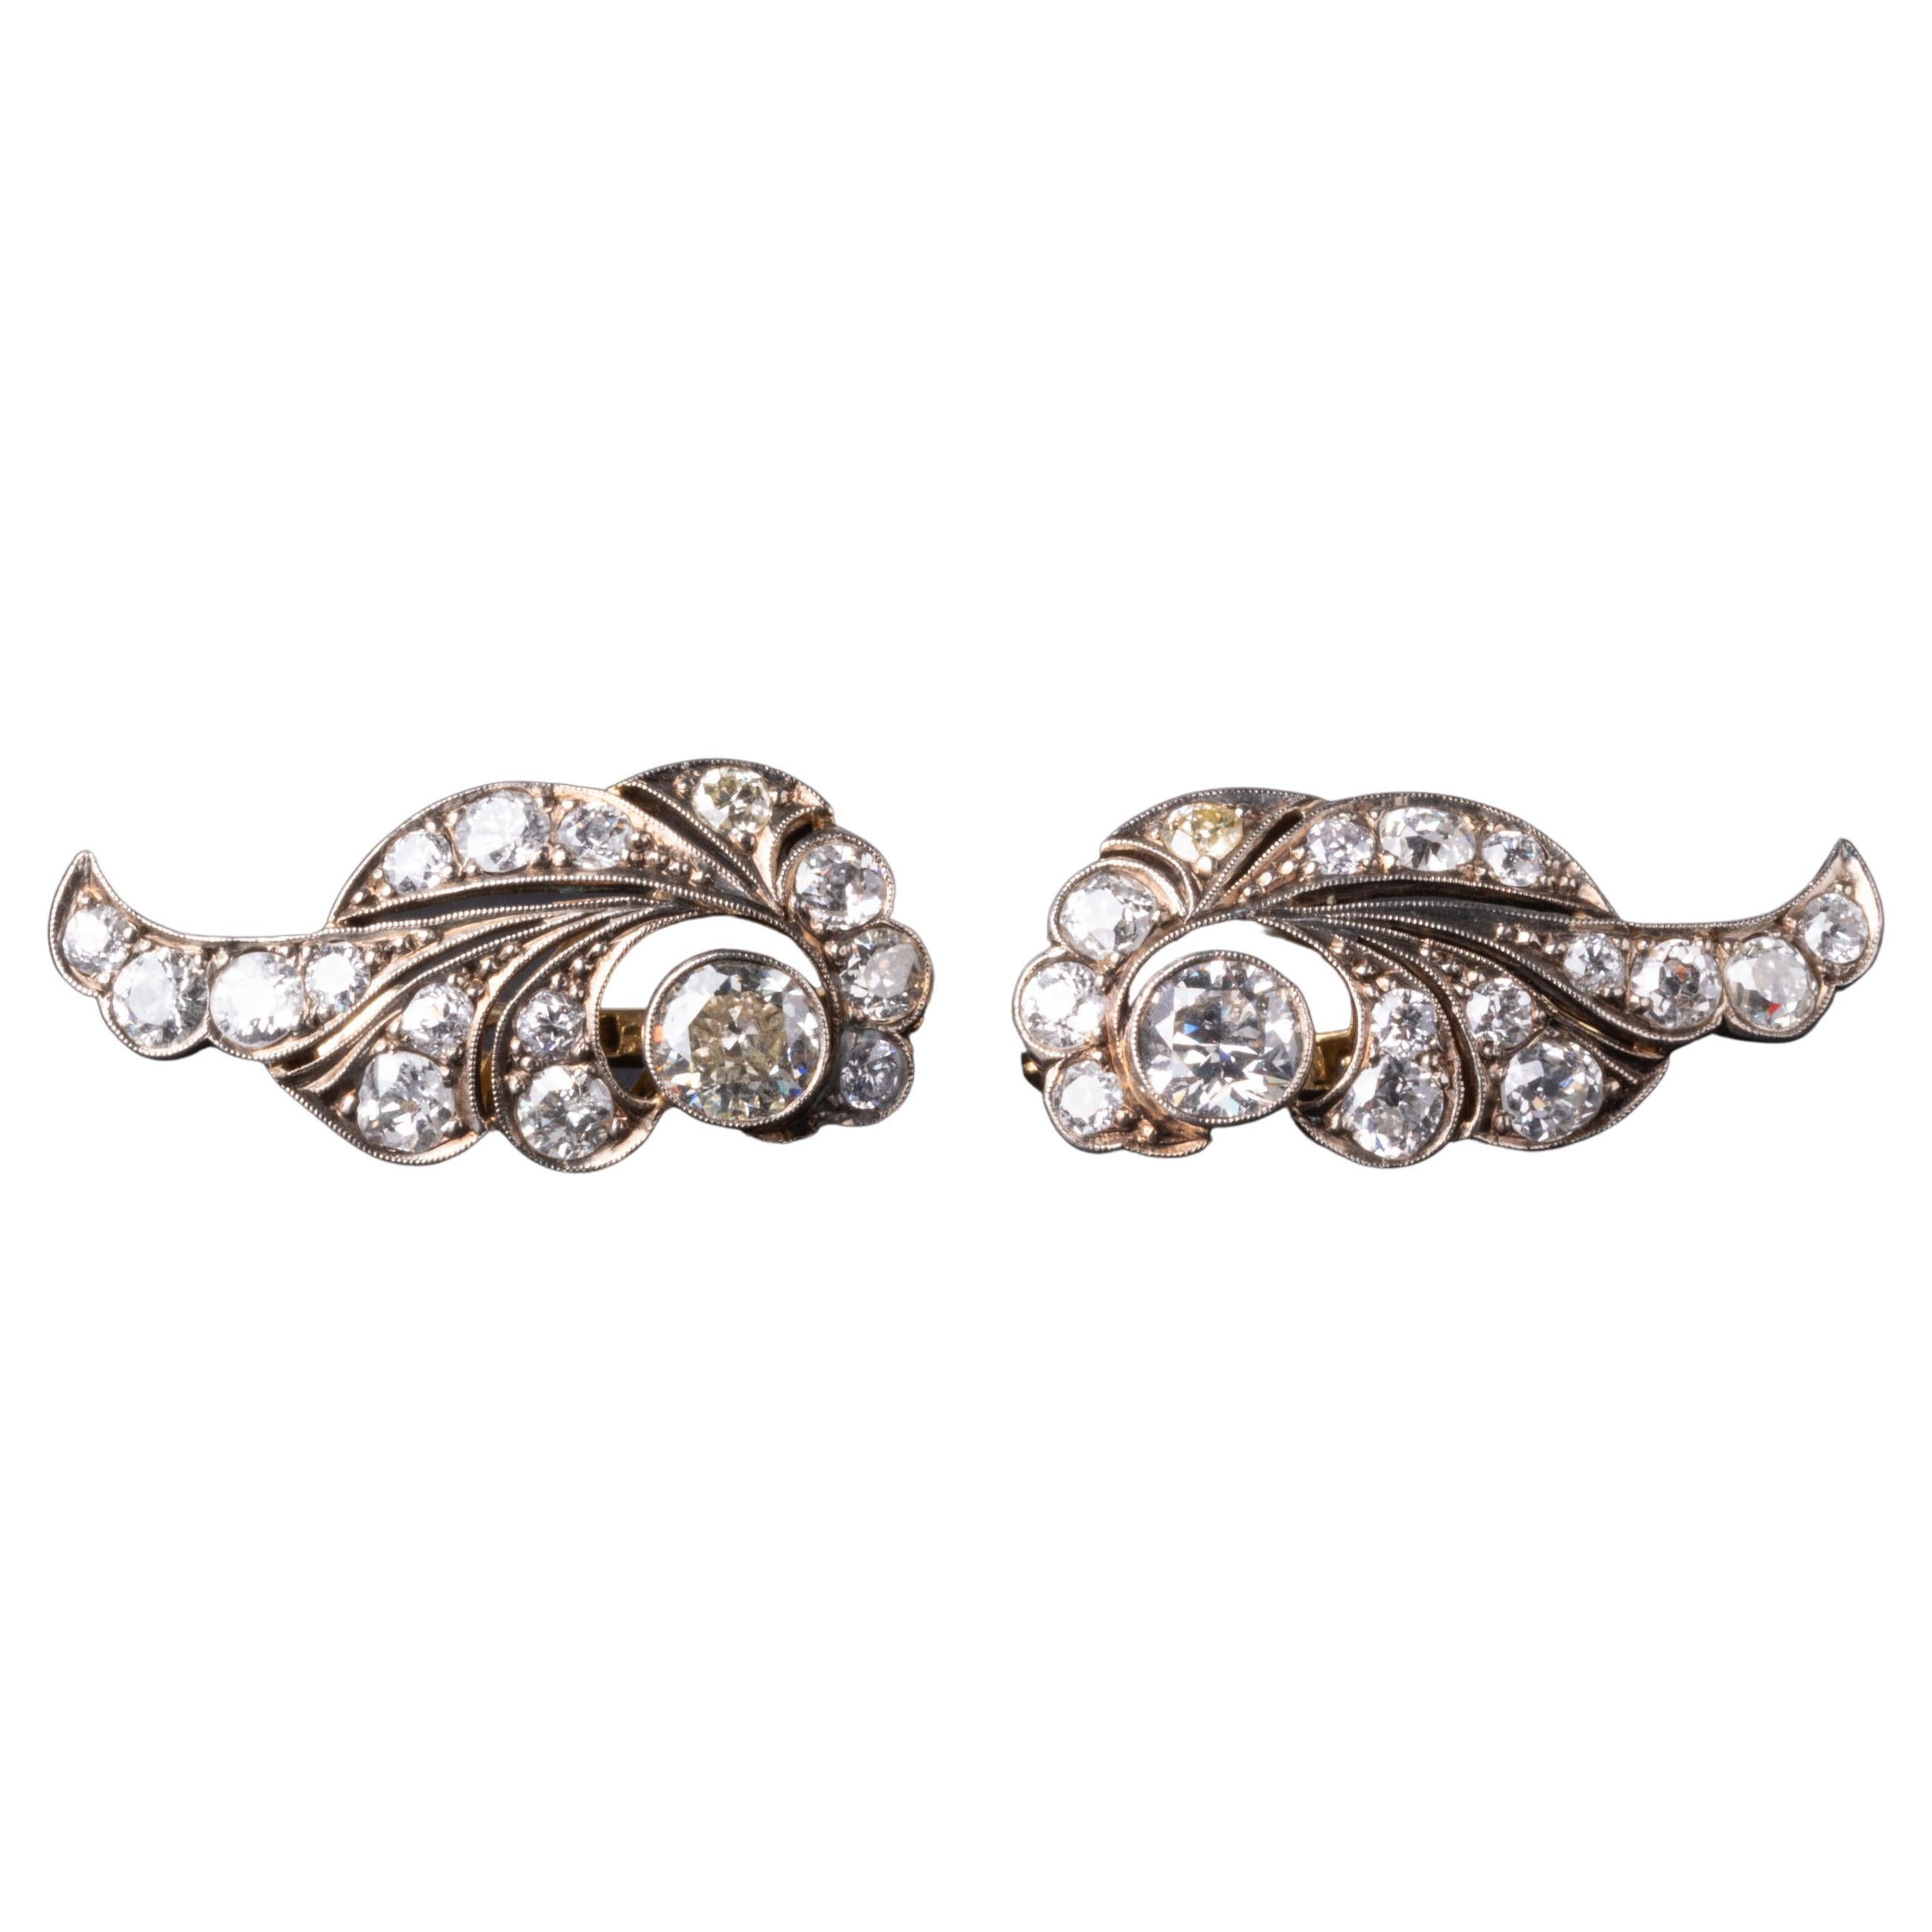 Royal 7.3 CT Old Cut Diamond Earrings, 1900s Old European Cut Diamond Earrings